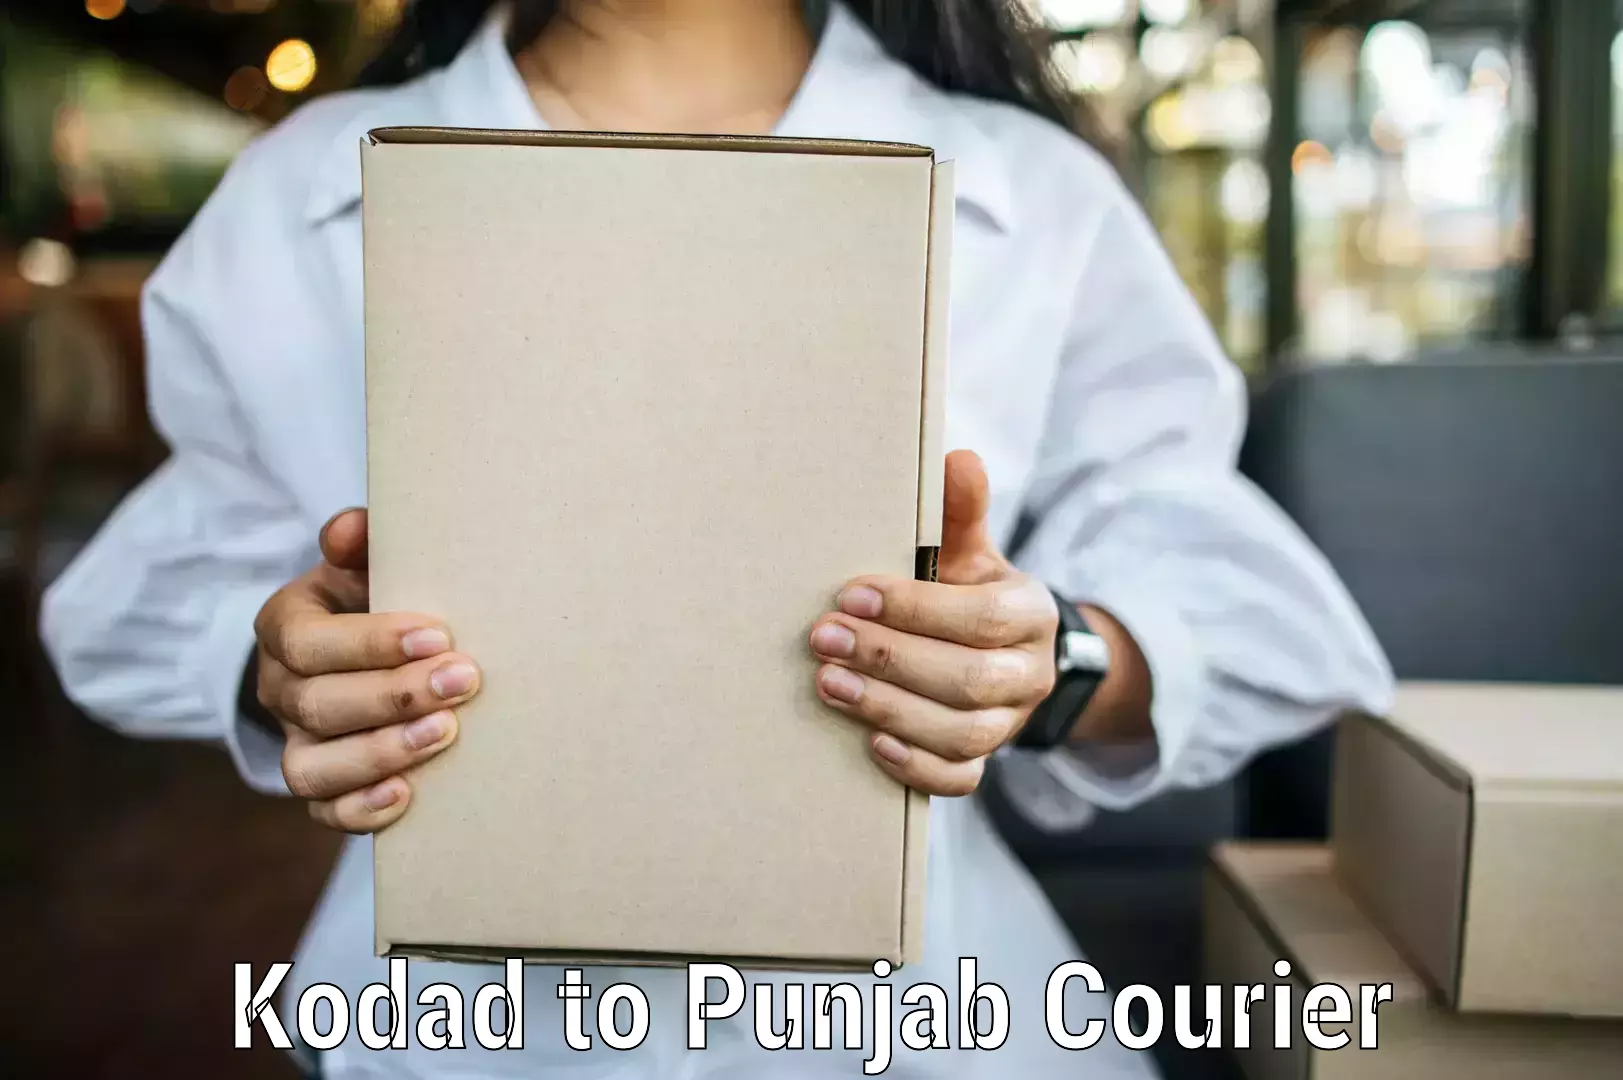 Courier service comparison Kodad to Patiala